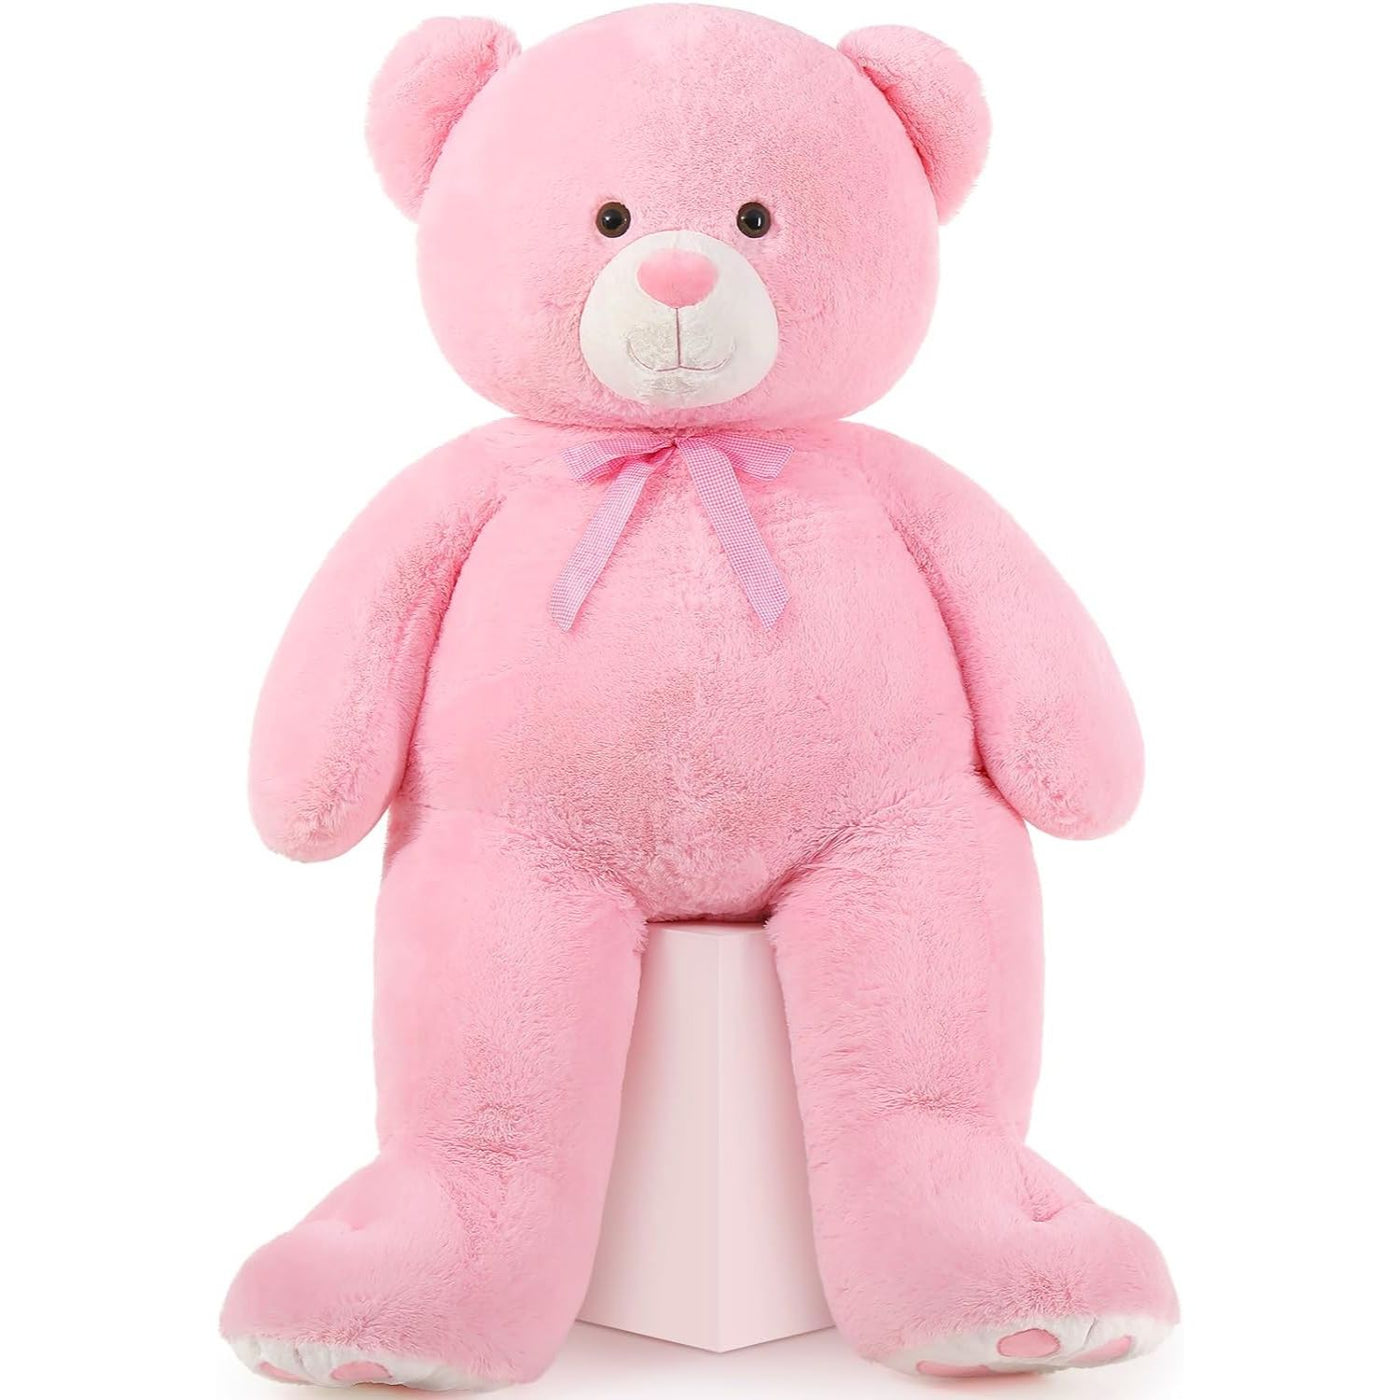 Giant Teddy Bear Plush Toy, Pink, 43/55 Inches - MorisMos Stuffed Animals